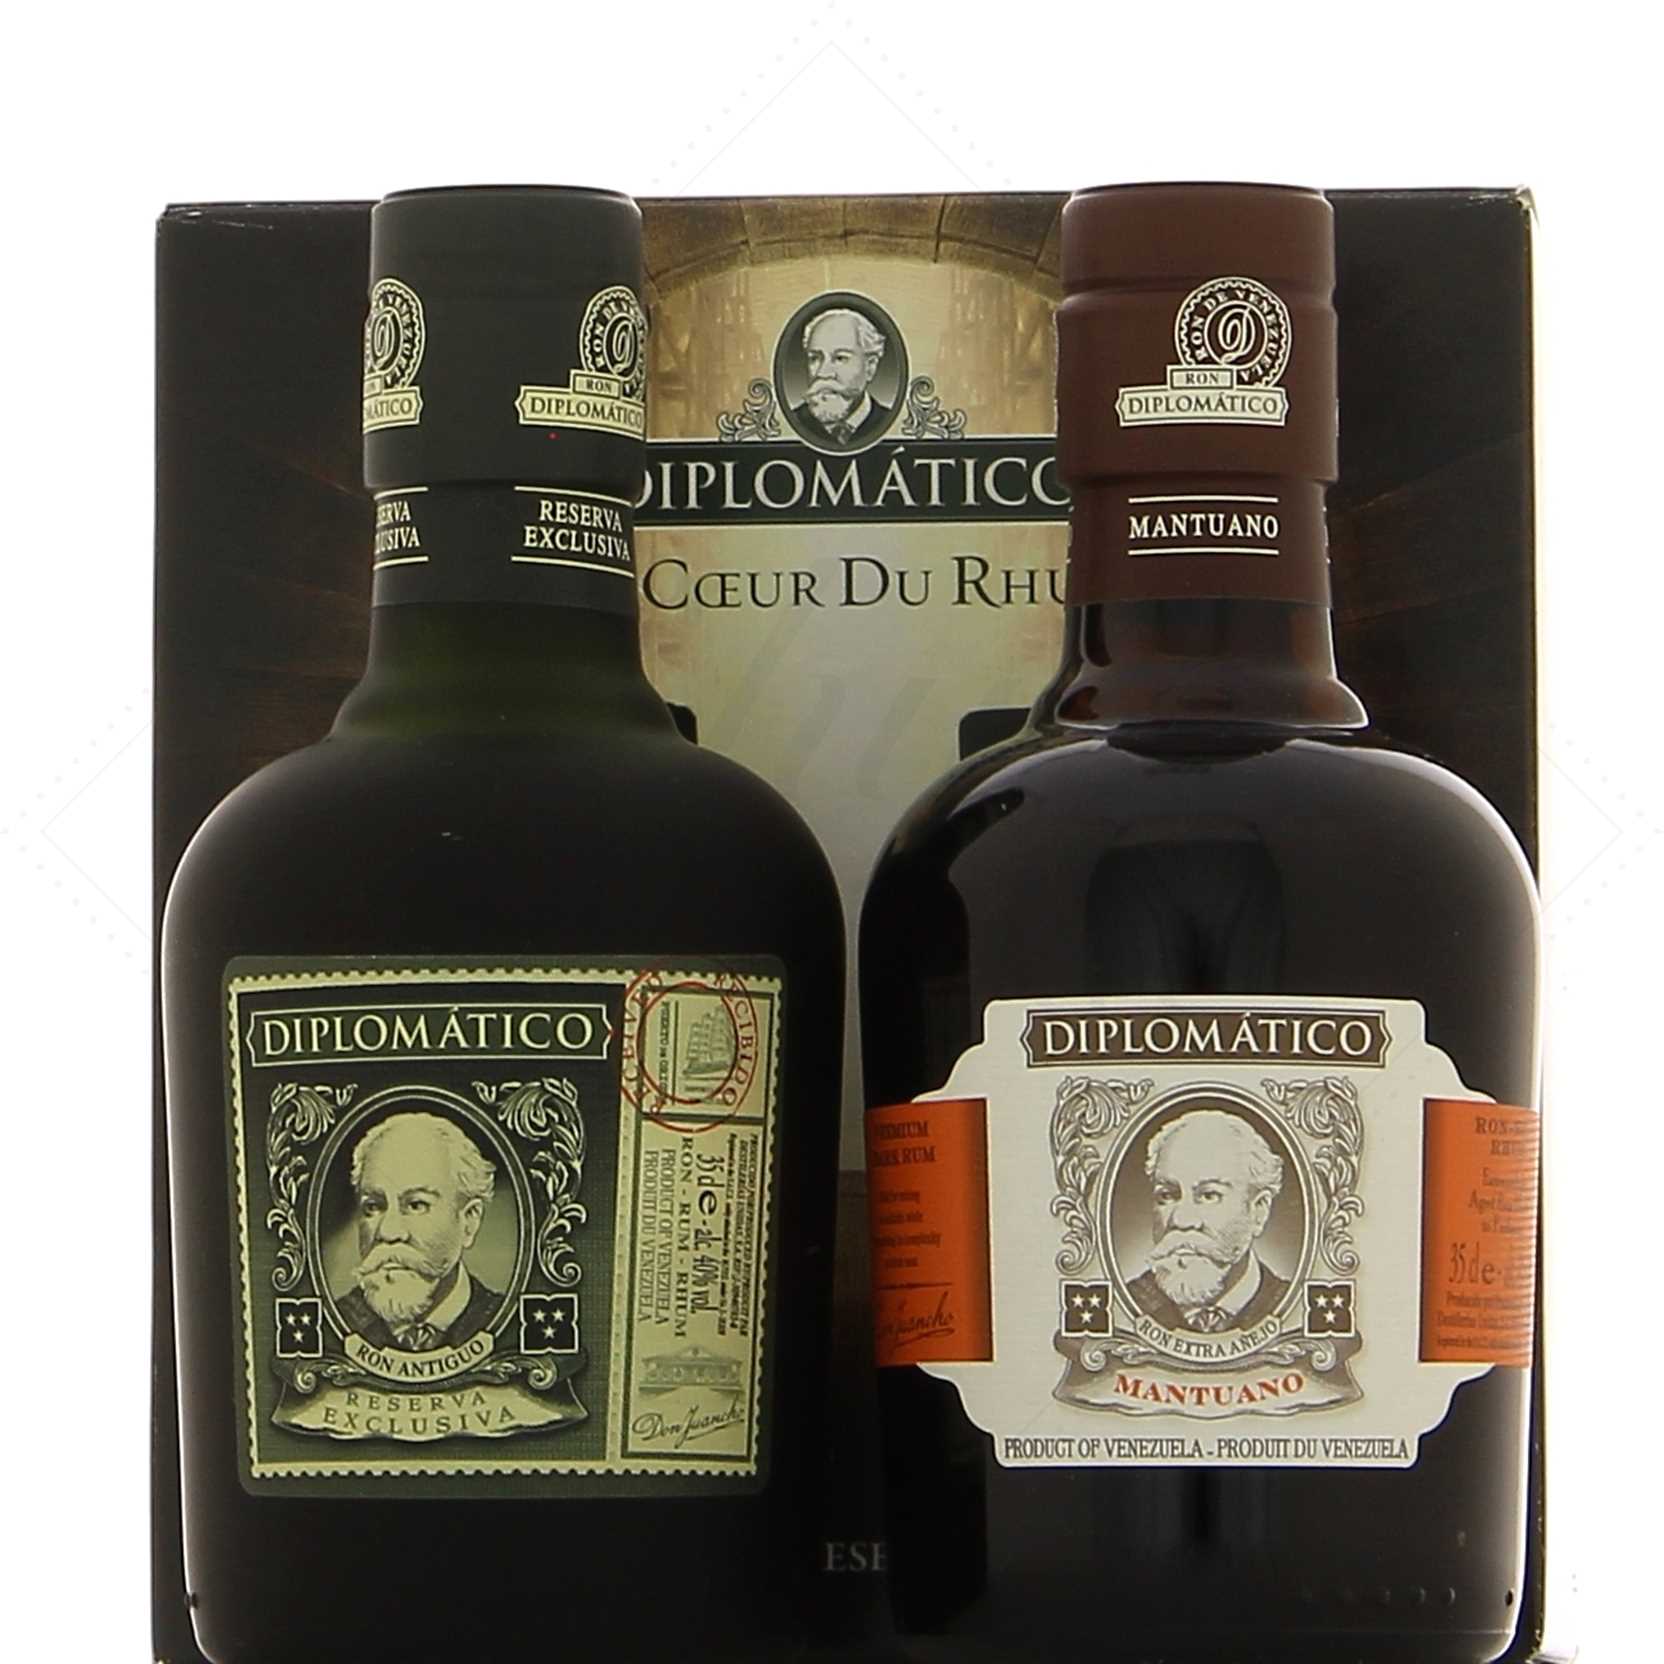 Diplomatico 2005 Single Vintage Venezuelan Rum 750ml